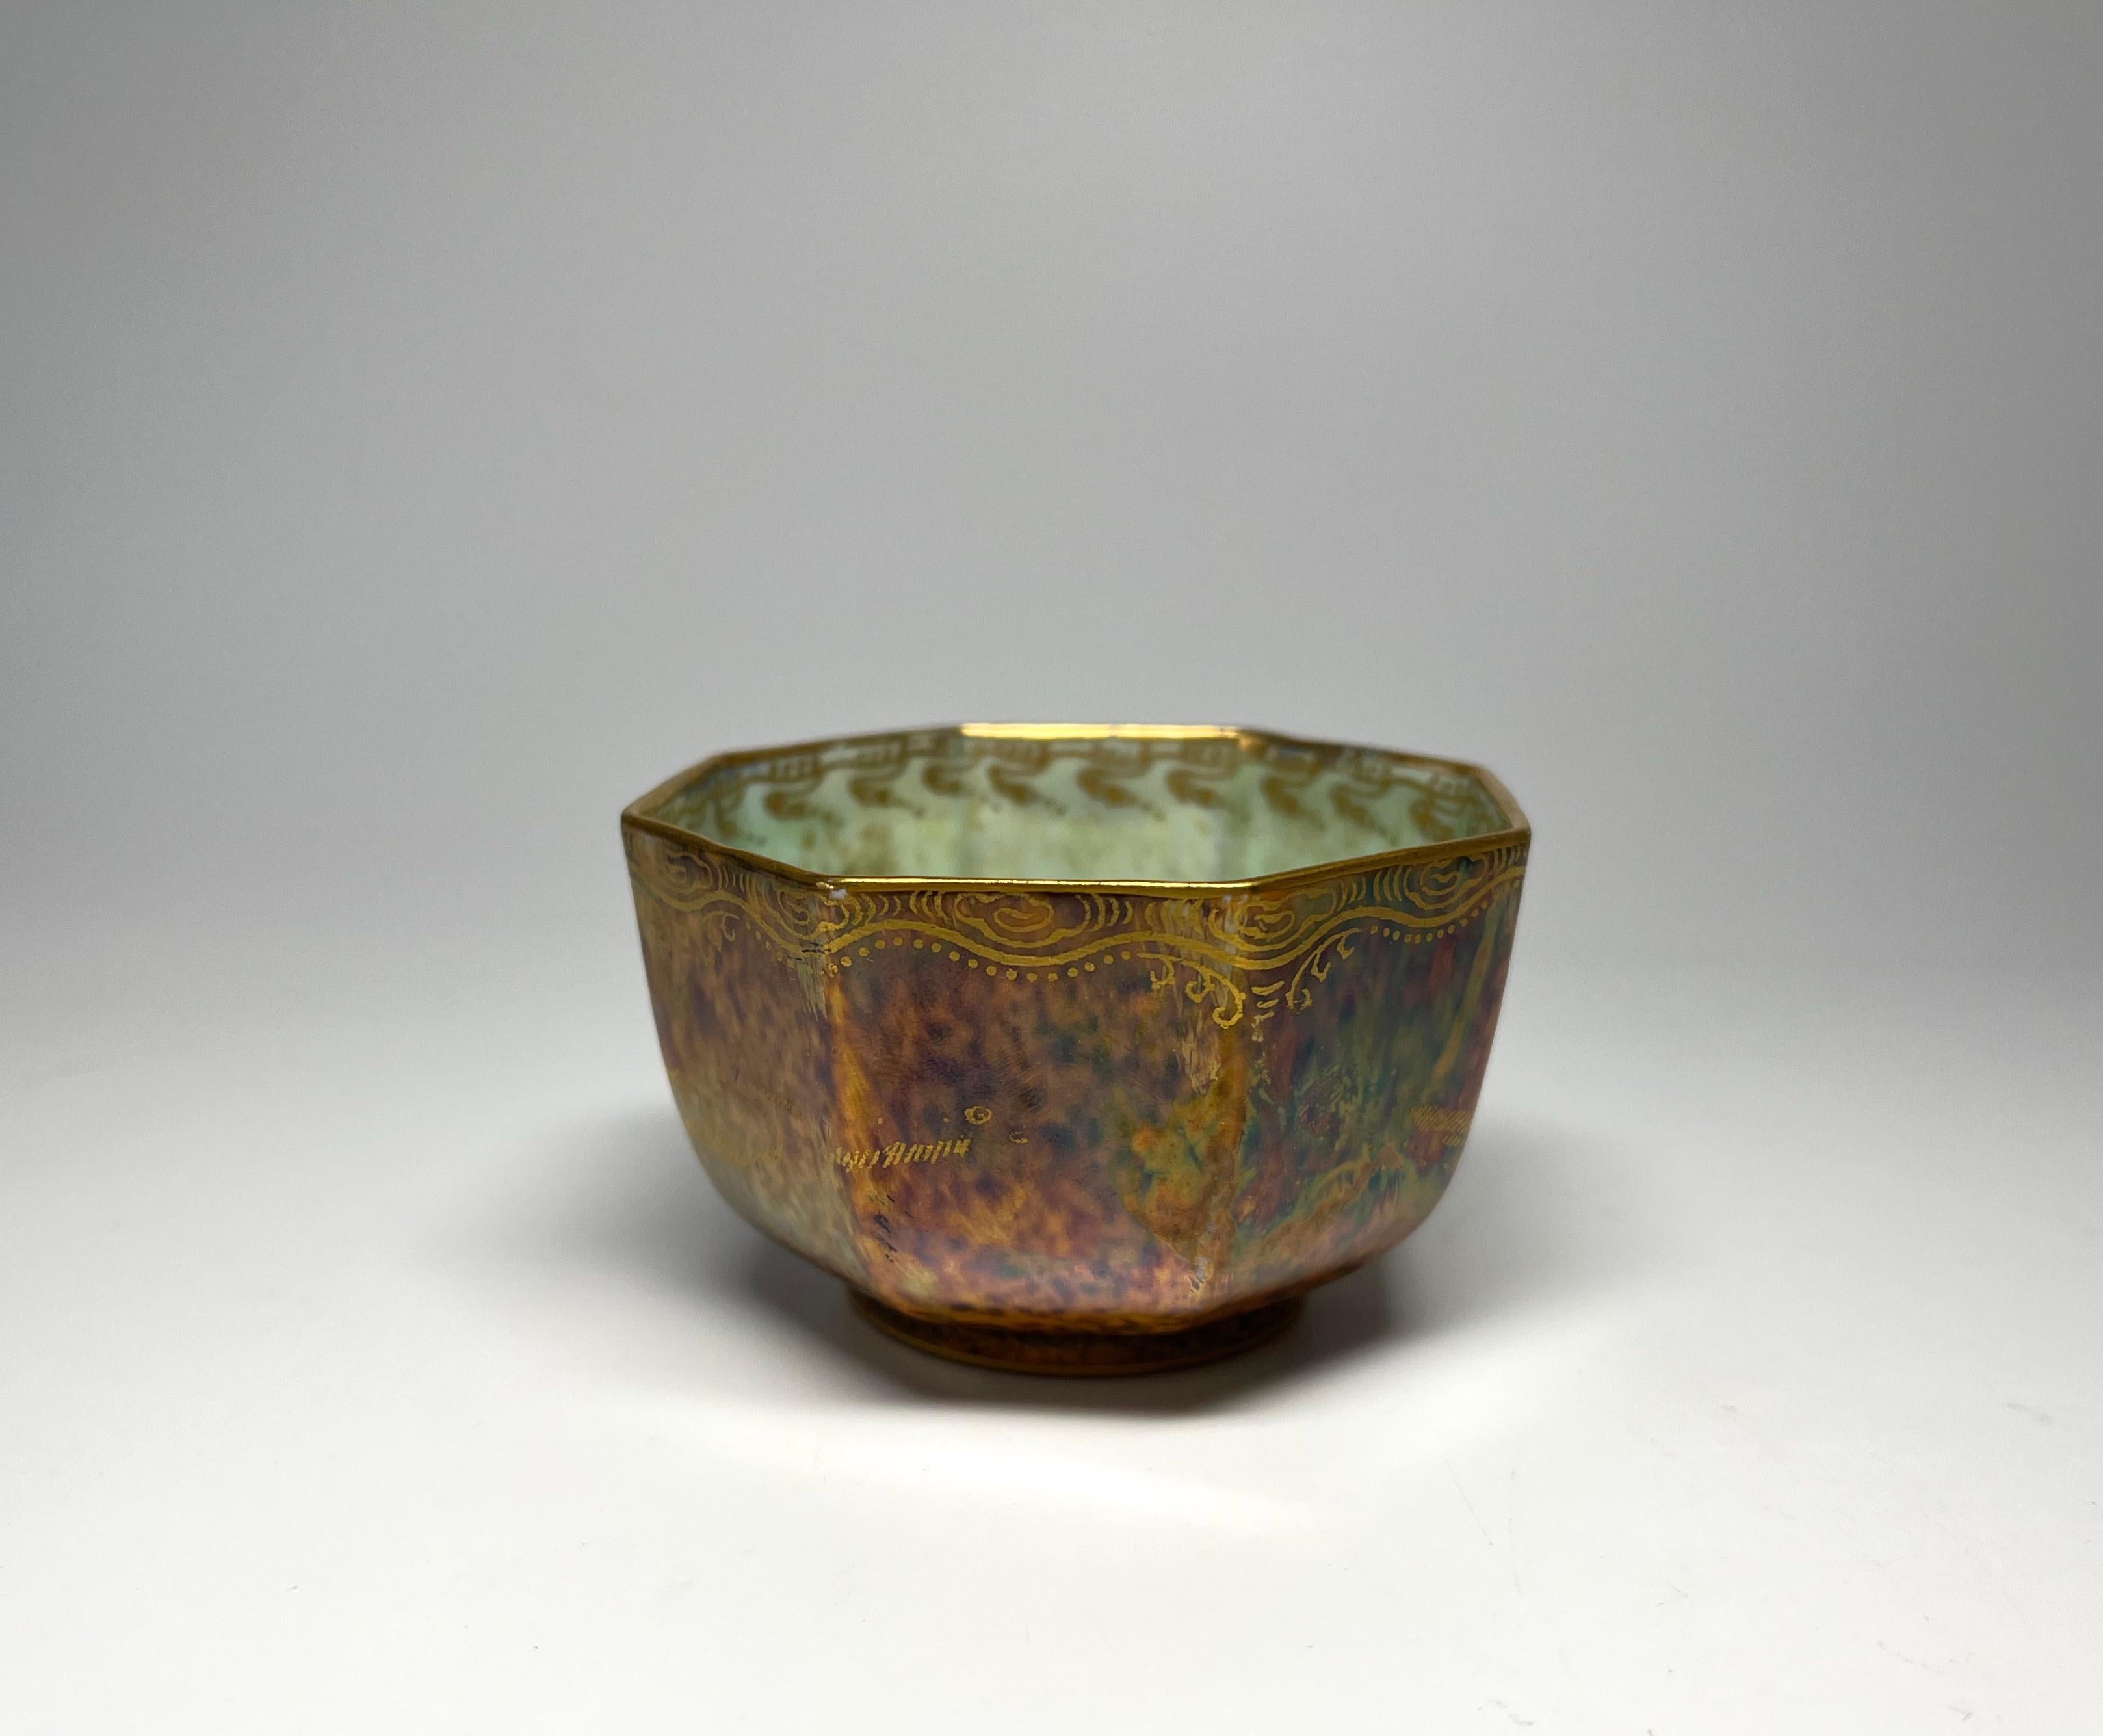 20th Century Miniature Lustre Octagonal Bowl by Daisy Makeig-Jones, Wedgwood, c1920